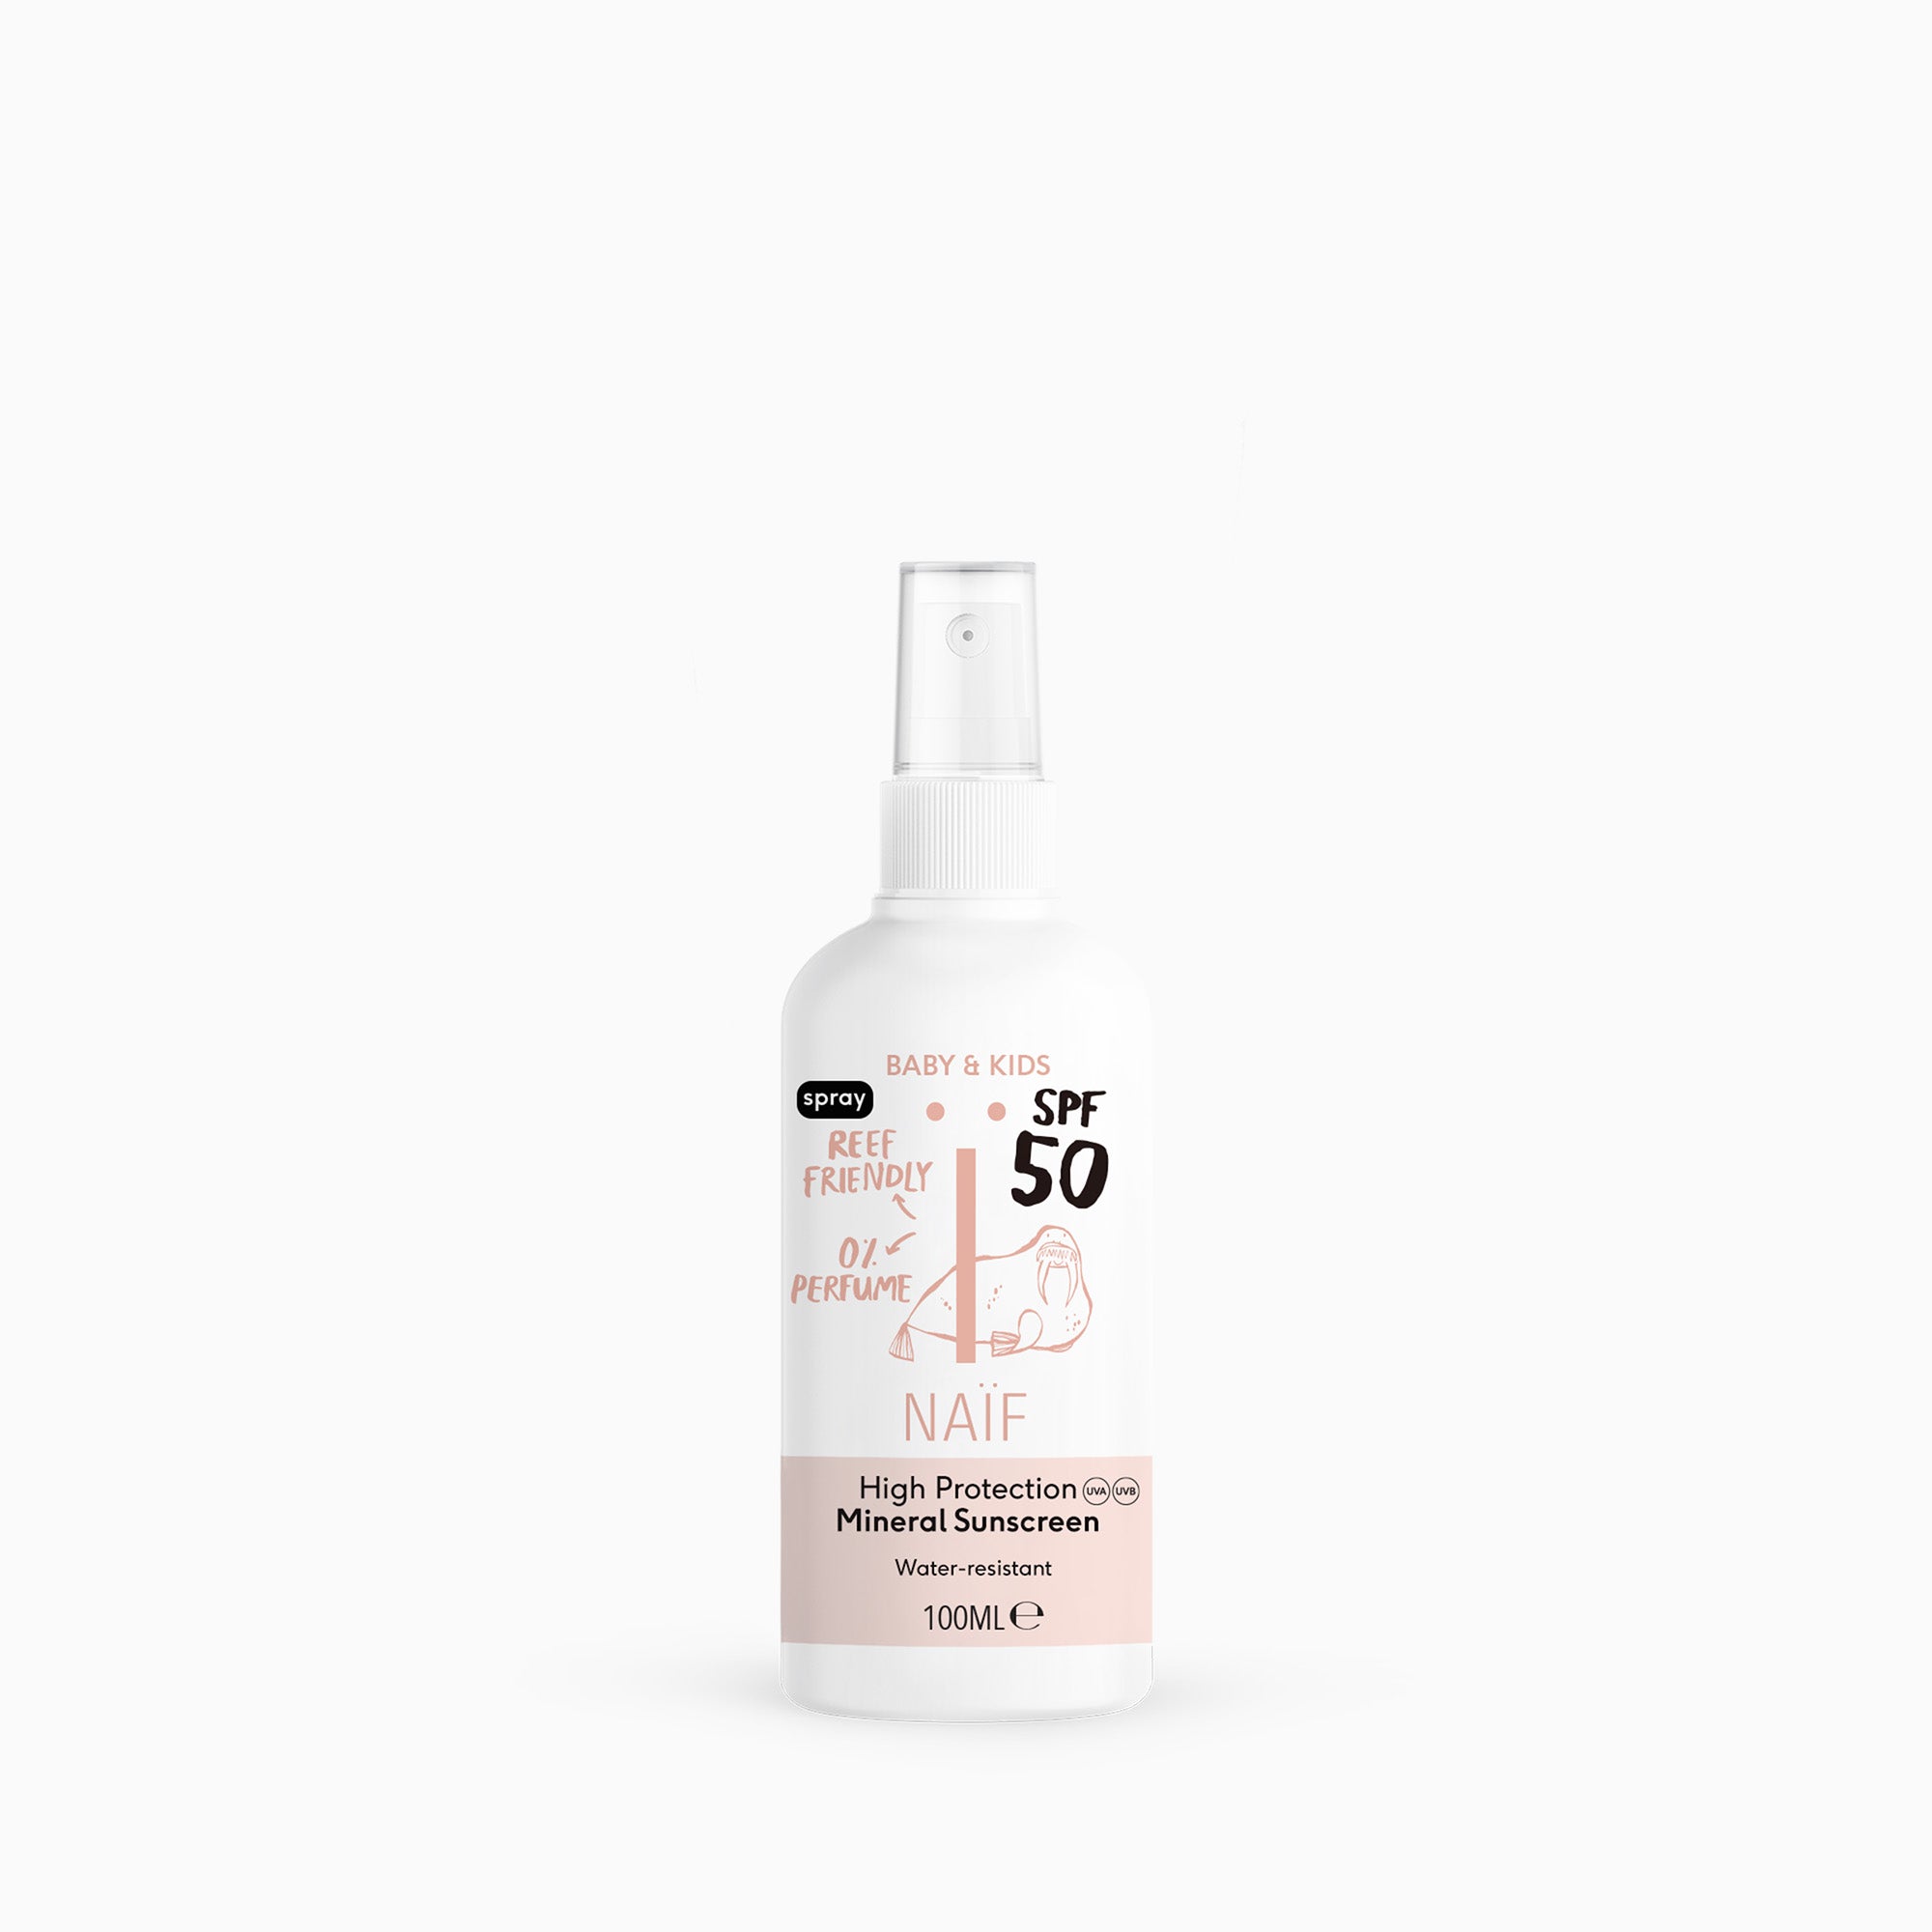 Sunscreen Spray 0% perfume for Baby & Kids SPF50 100ml